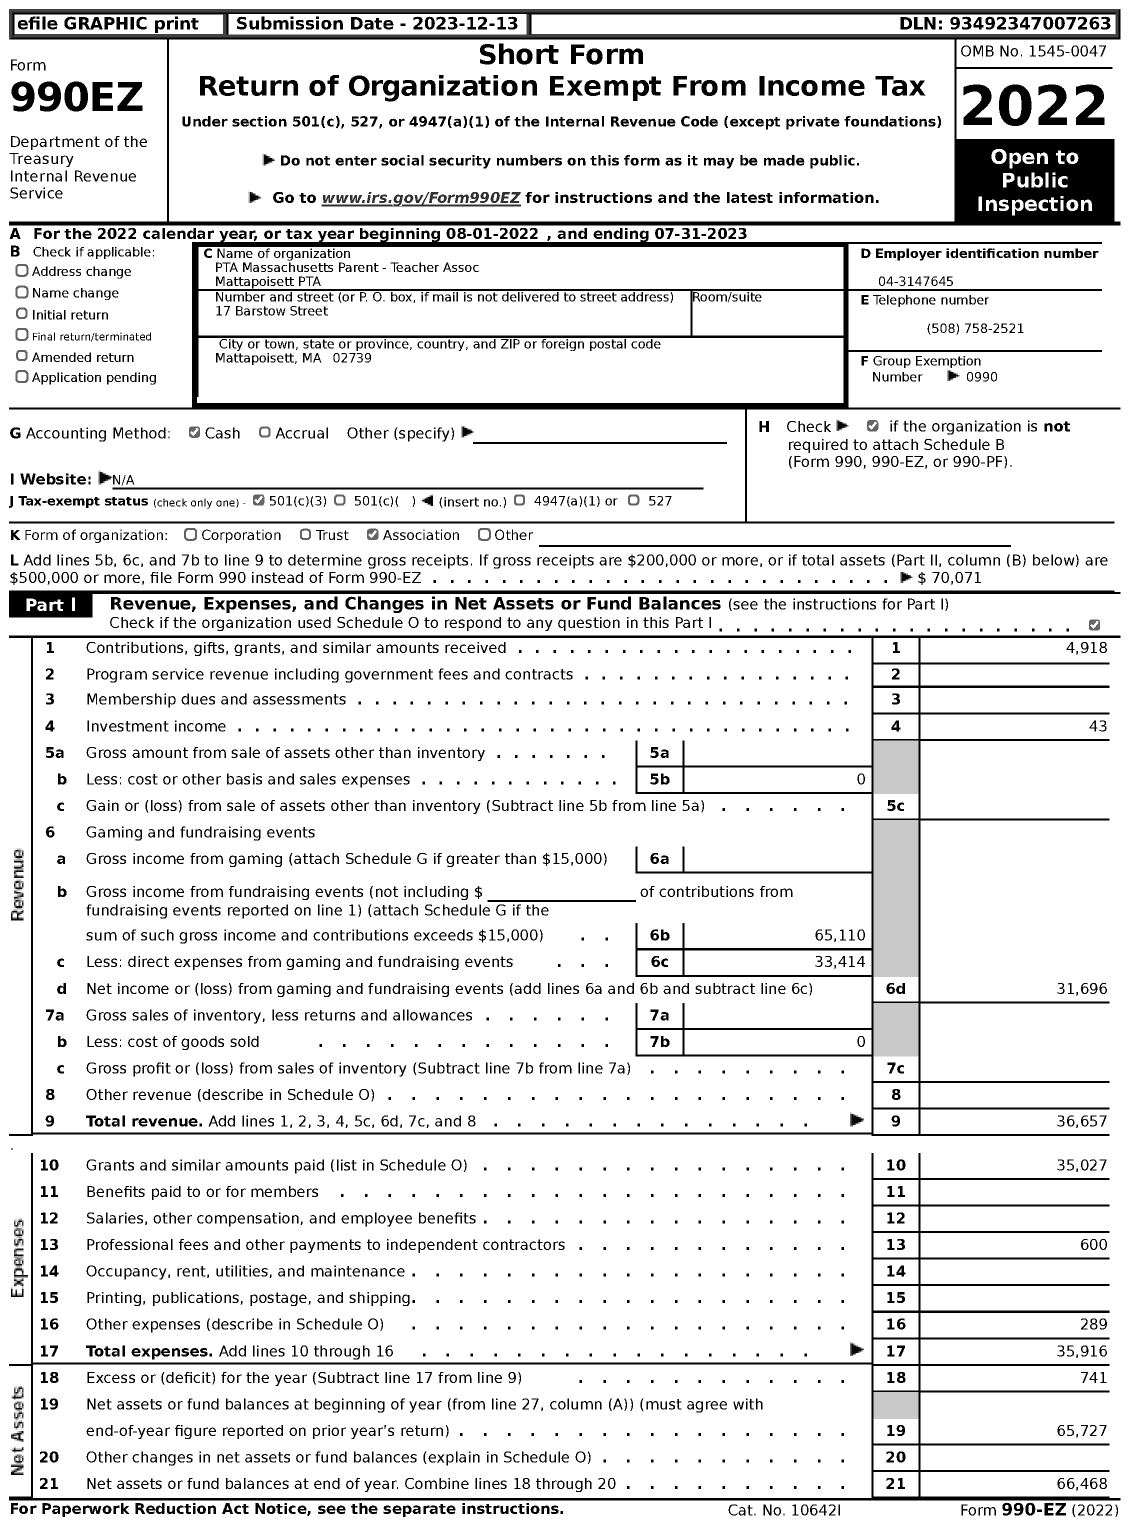 Image of first page of 2022 Form 990EZ for PTA Massachusetts Parent - Teacher Assoc Mattapoisett PTA